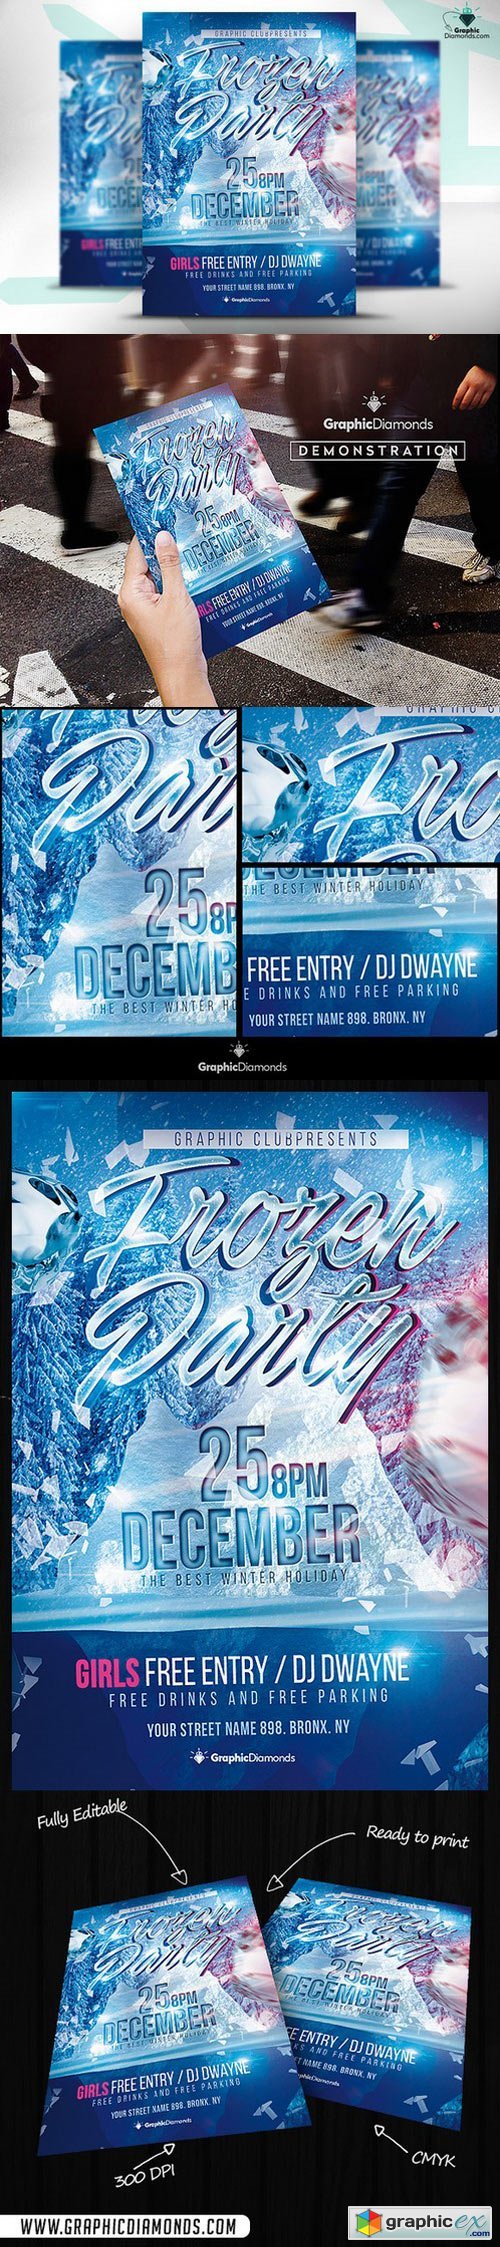 Frozen Party Flyer PSD